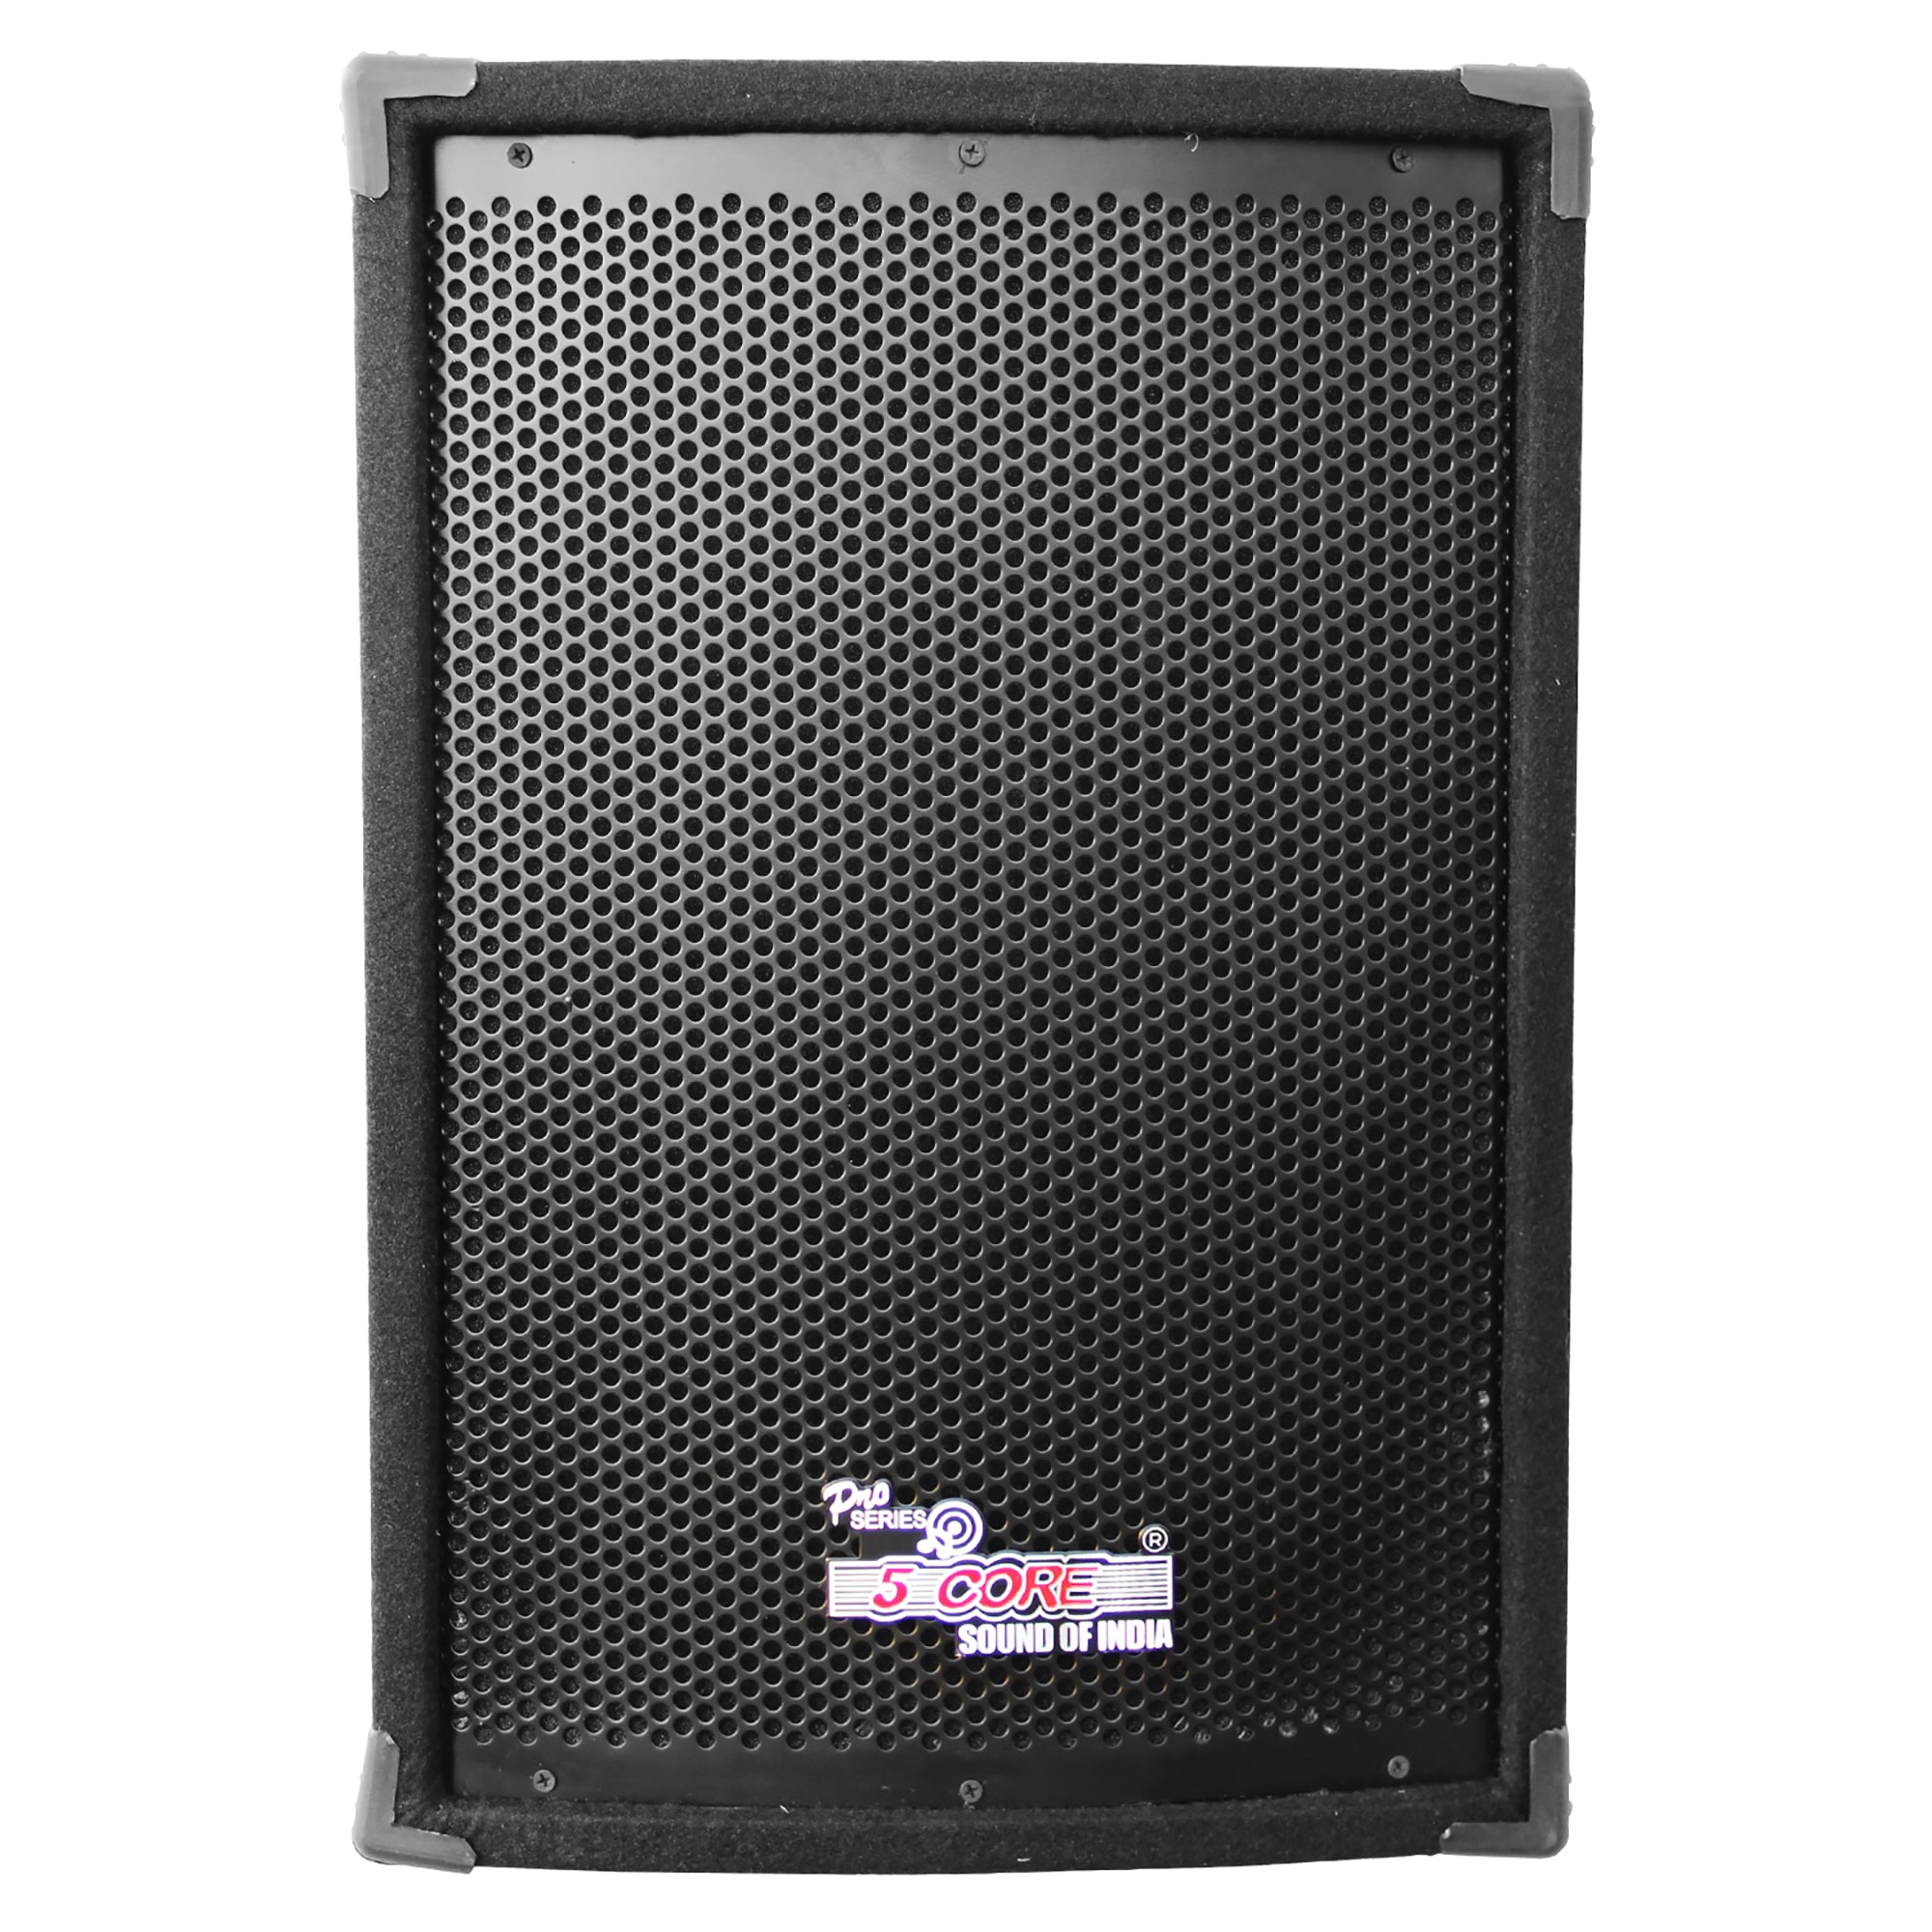 5 CORE 12" Inch Passive DJ Speaker 2000W 2.5" Voice Coil Bookshelf Sound System 2 Way Pro Audio DJ Subwoofer - 12x1 200DX